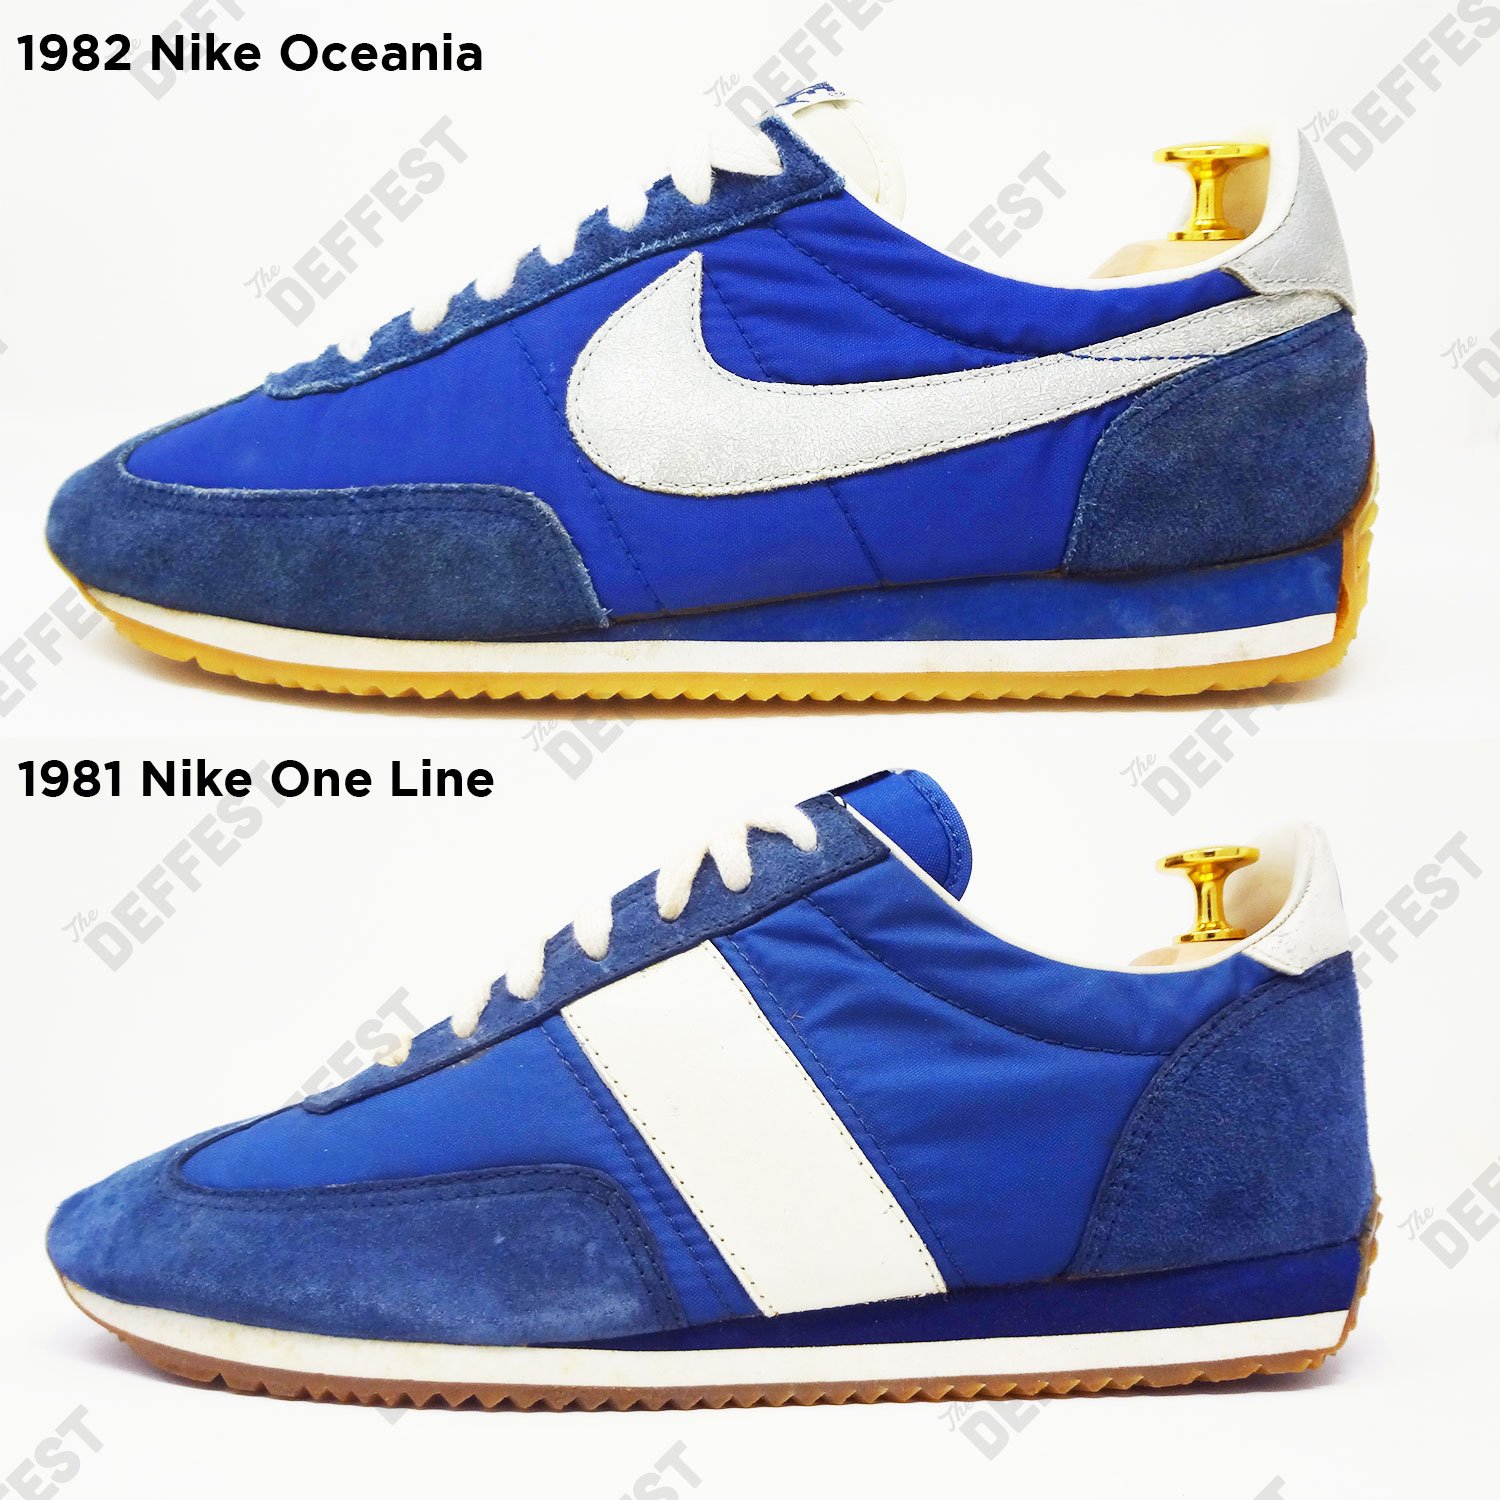 The Rarest Nike Shoes Ever - The One Line / Nike Oceania comparison photos